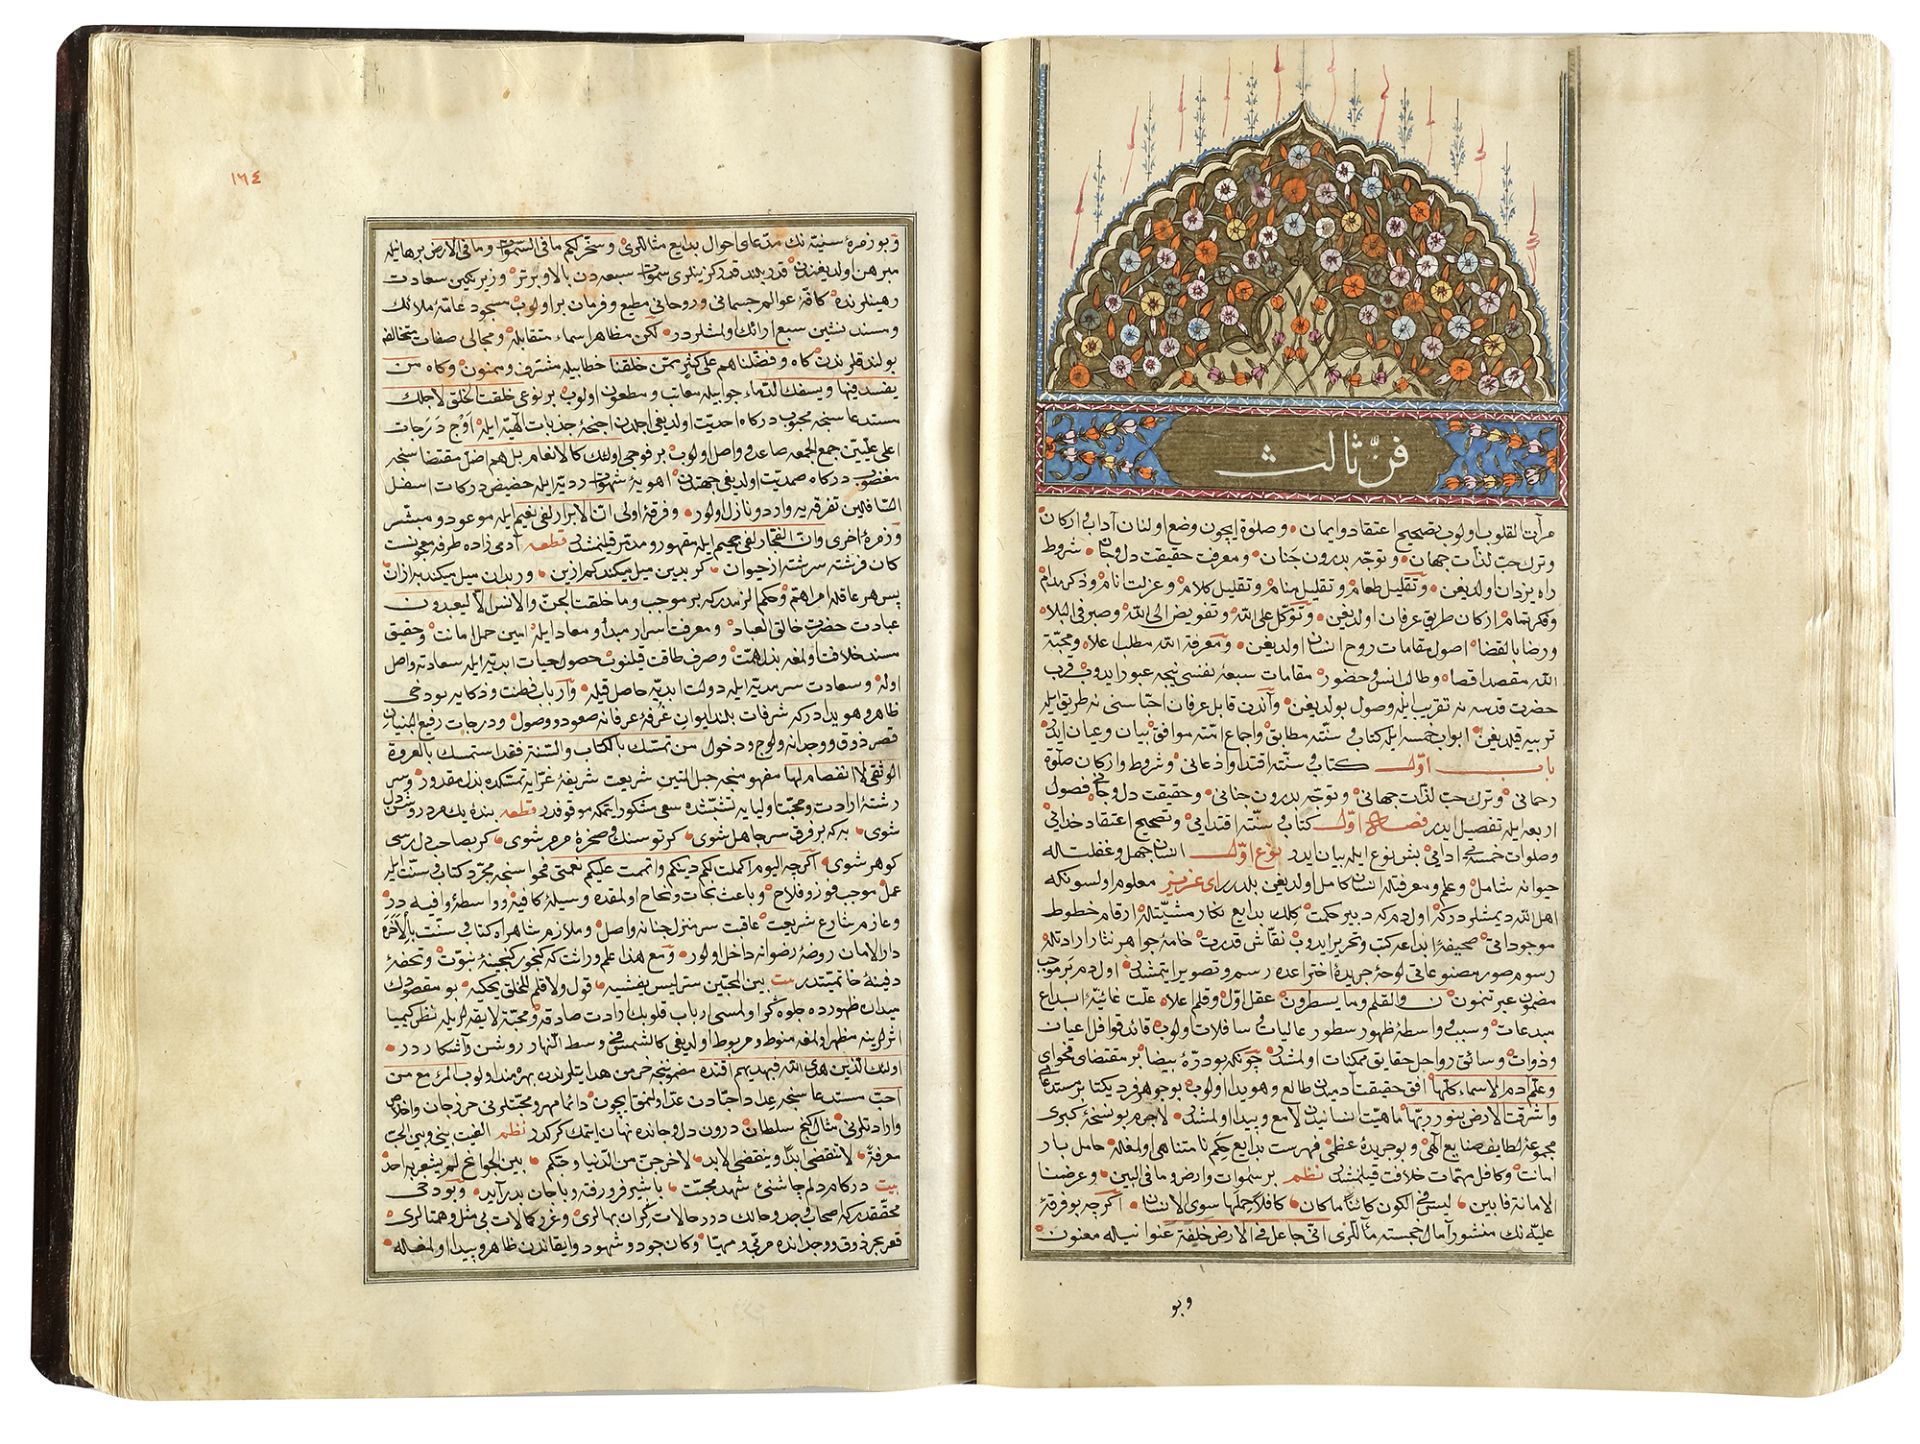 MARIFETNAME, IBRAHIM HAKKI, COPIED BY SAE'D ALLAH BIN ALI BIN AHMED, TURKEY, 1221 AH/1806 AD - Image 39 of 58